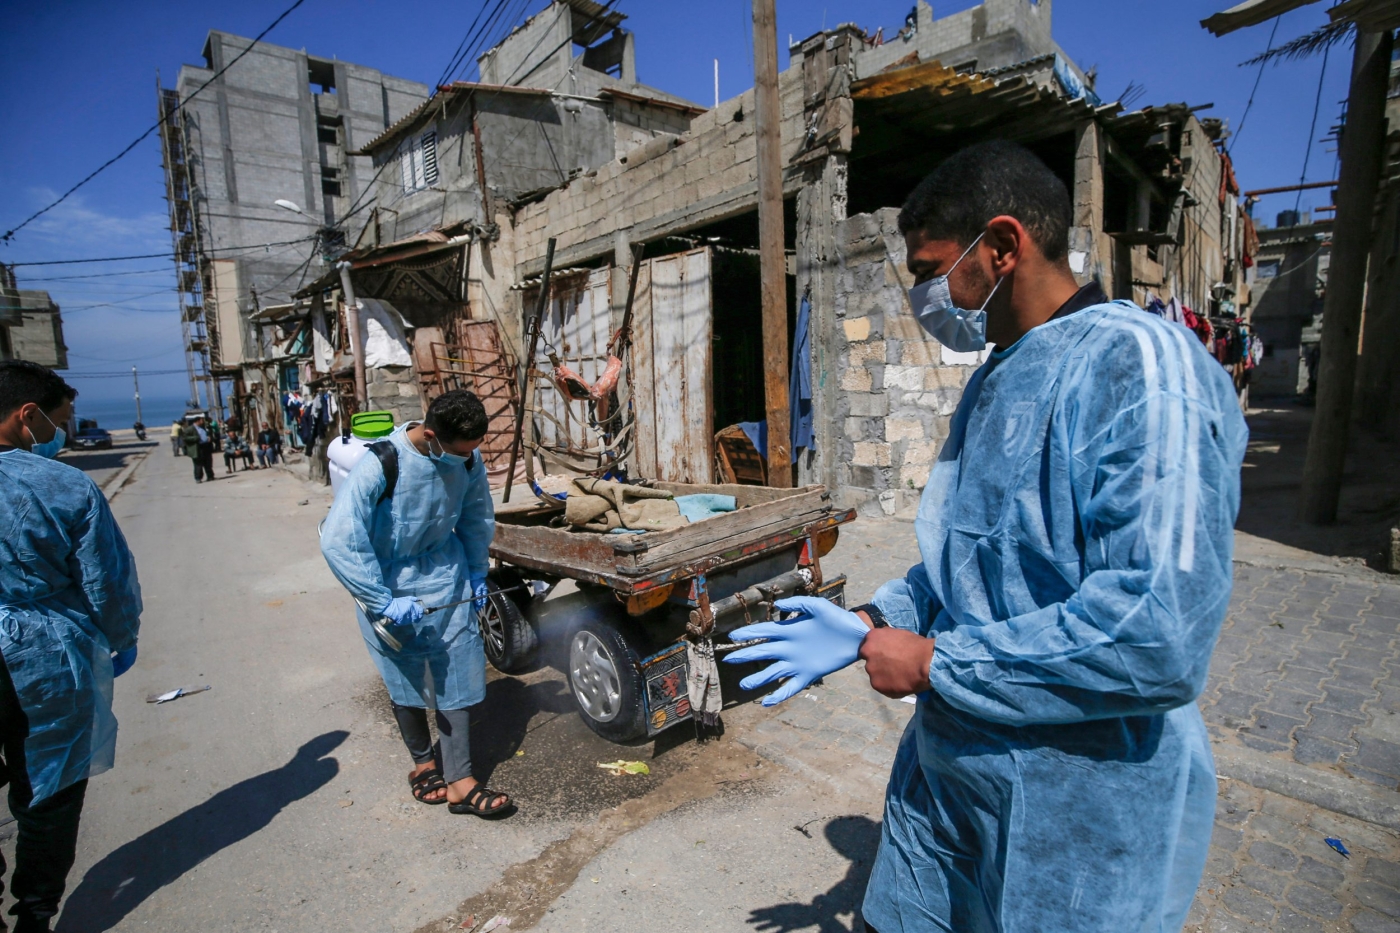 Coronavirus: Gaza prepares for worst amid blockade, lack of resources |  Middle East Eye